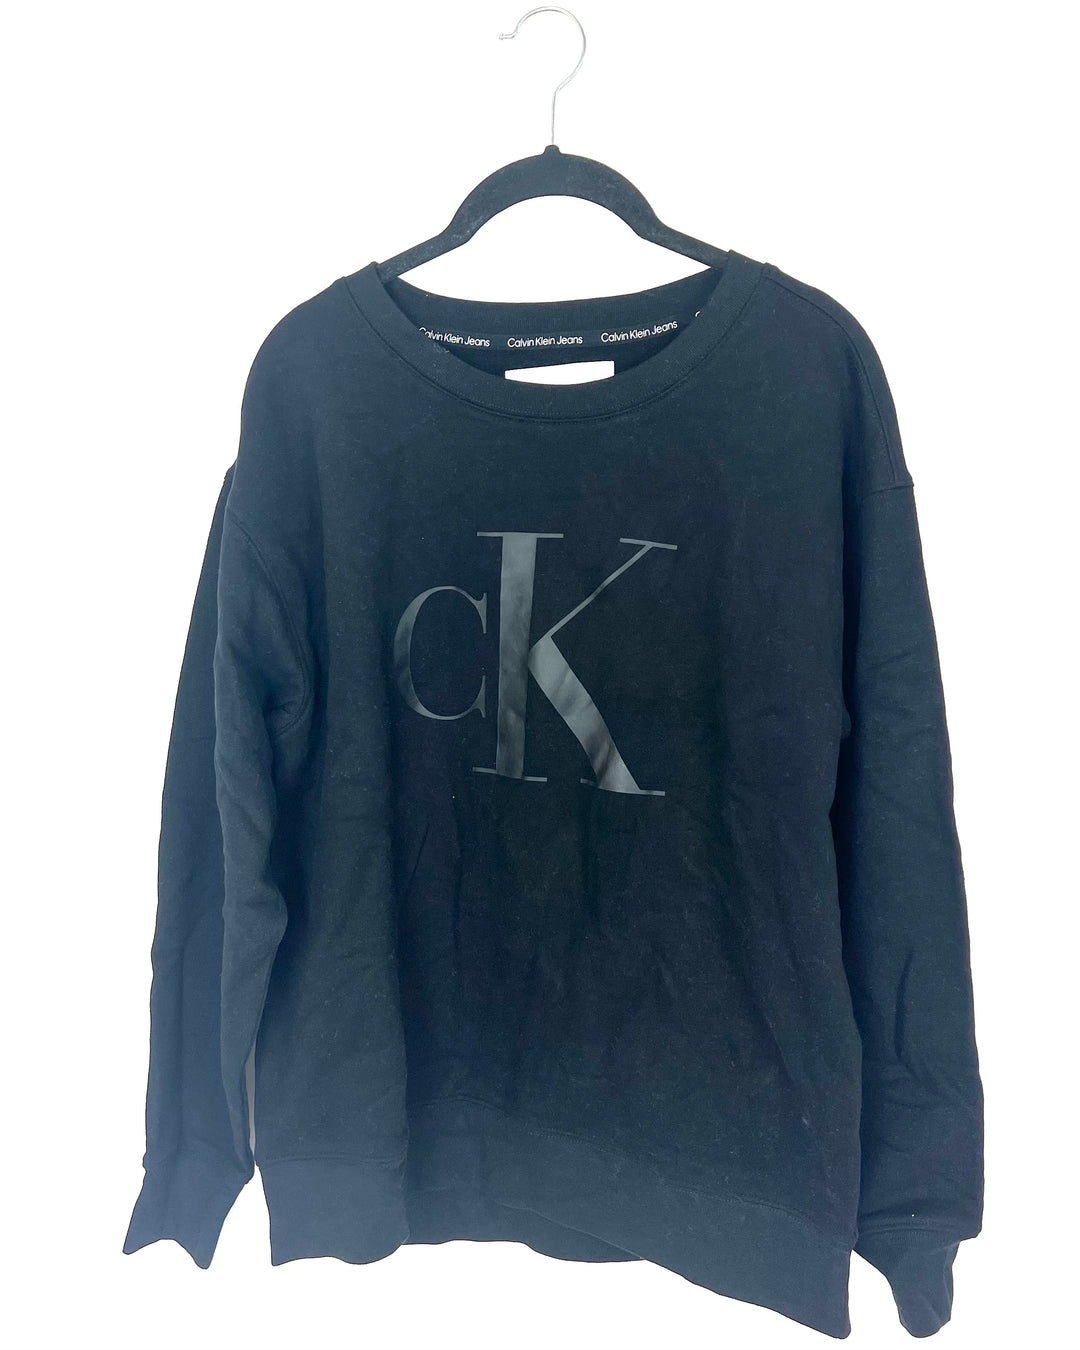 Black Crew Neck Sweatshirt - Size 4/6